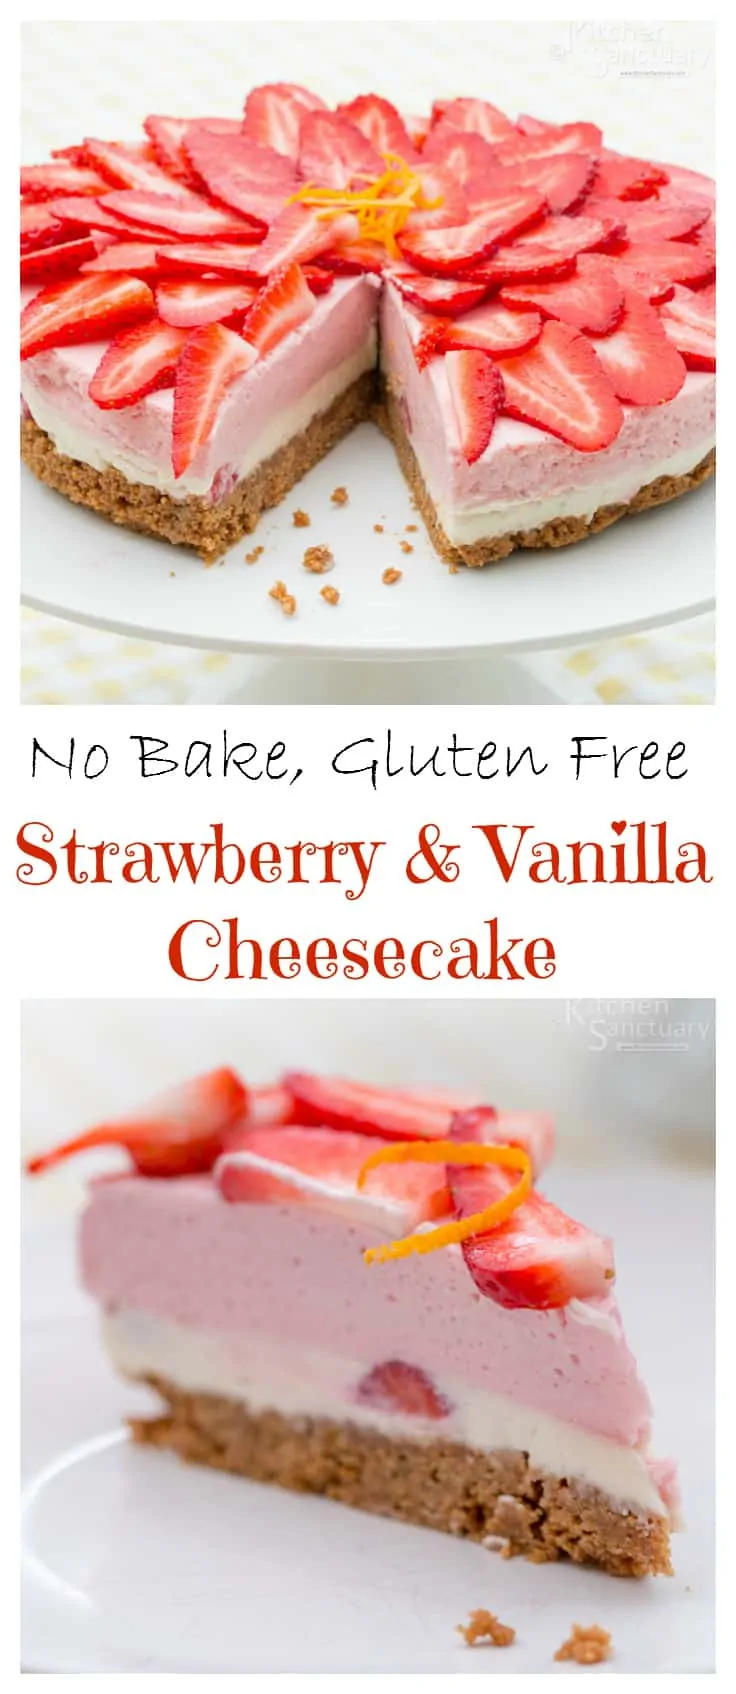 Strawberry and Vanilla Cheesecake - a delicious no-bake, gluten free dessert!